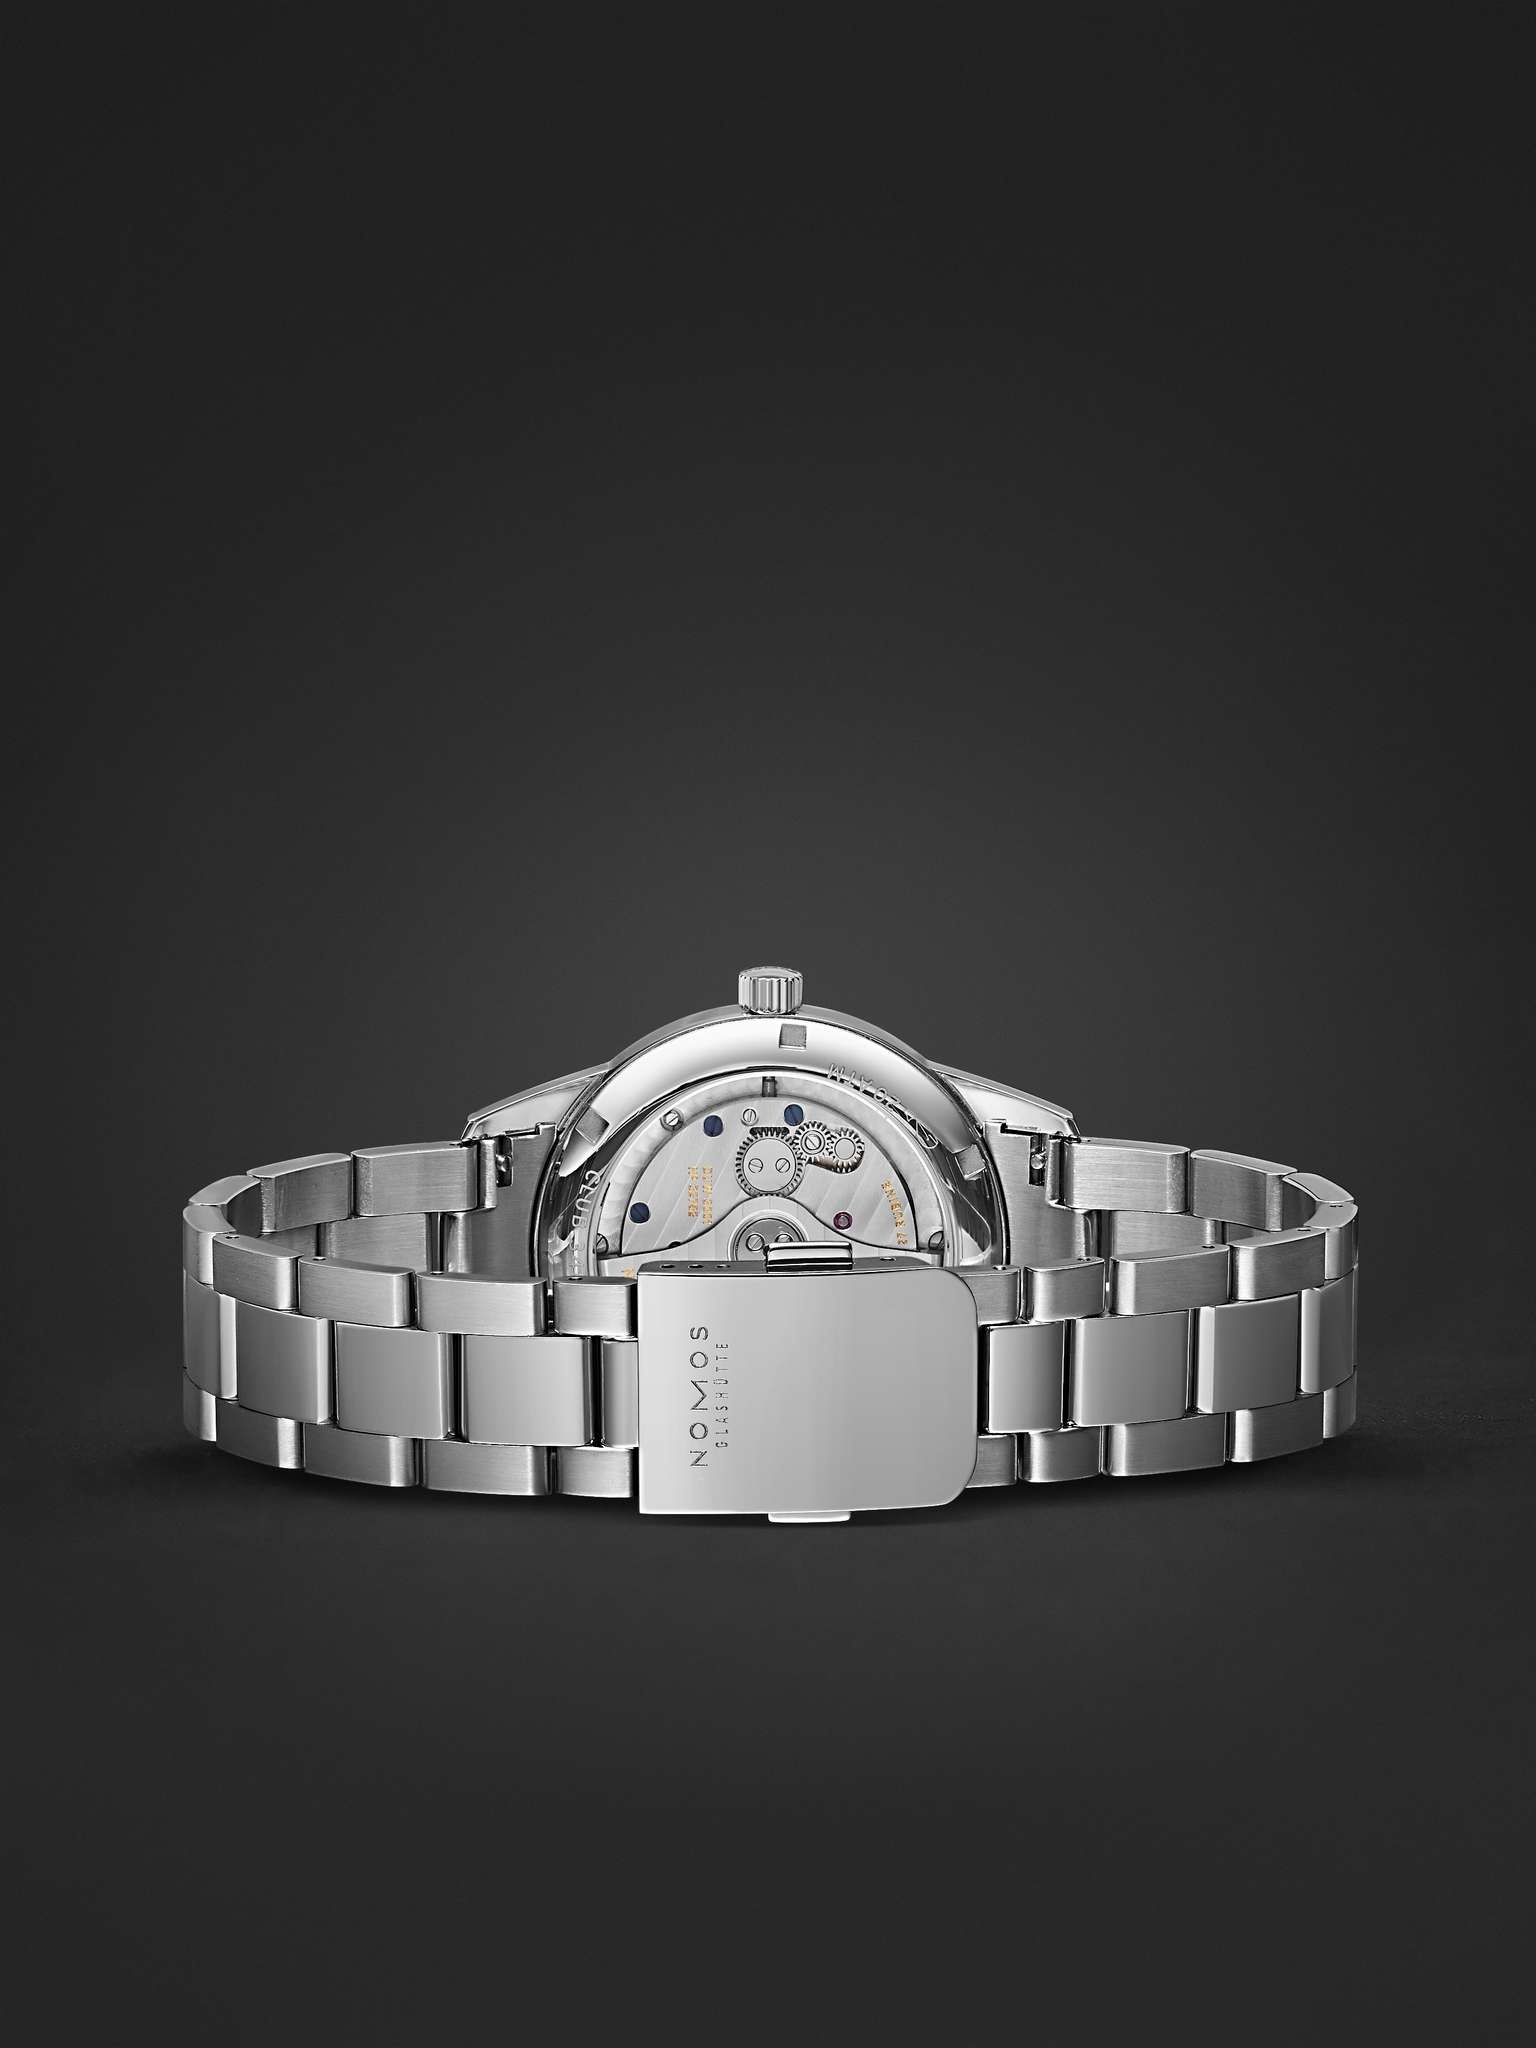 Club Sport Neomatik Automatic 37mm Stainless Steel Watch, Ref. No. 746 - 4